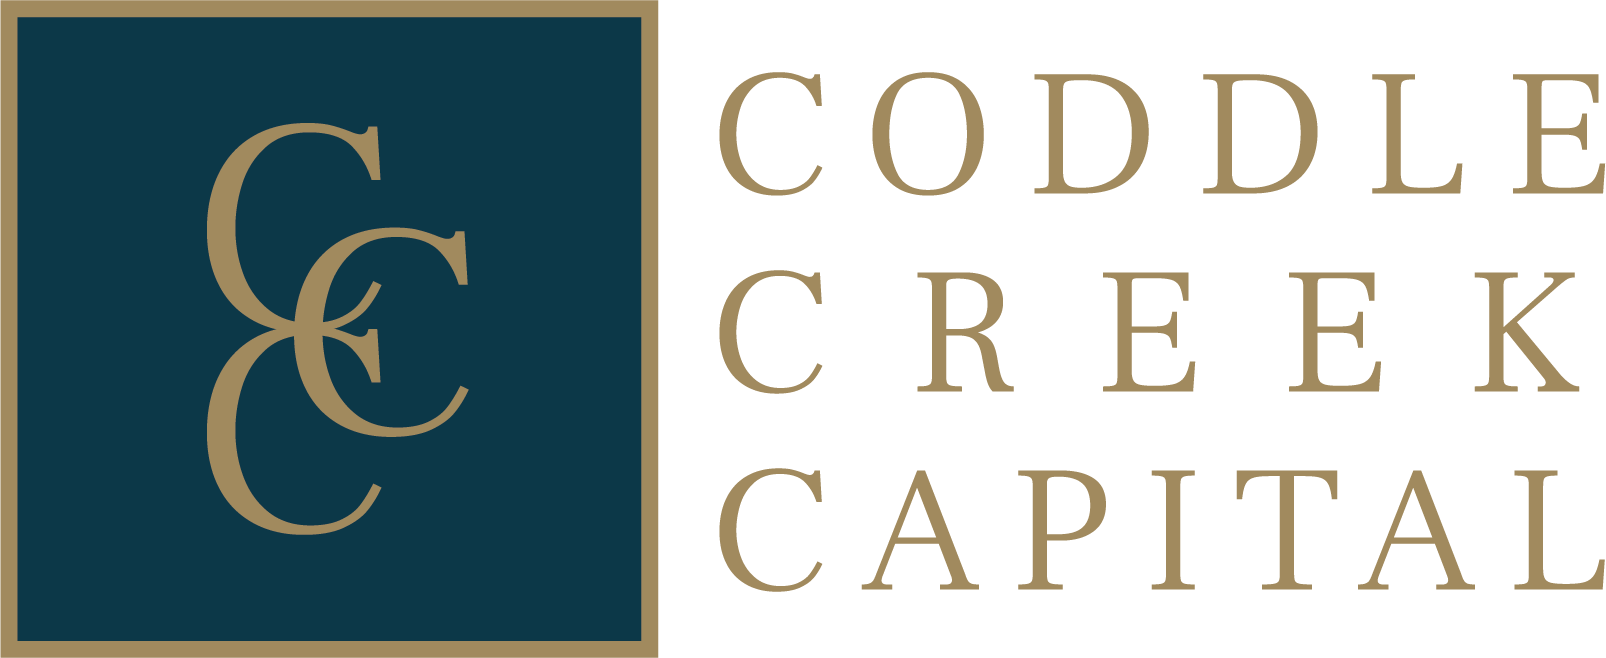 Coddle Creek Capital